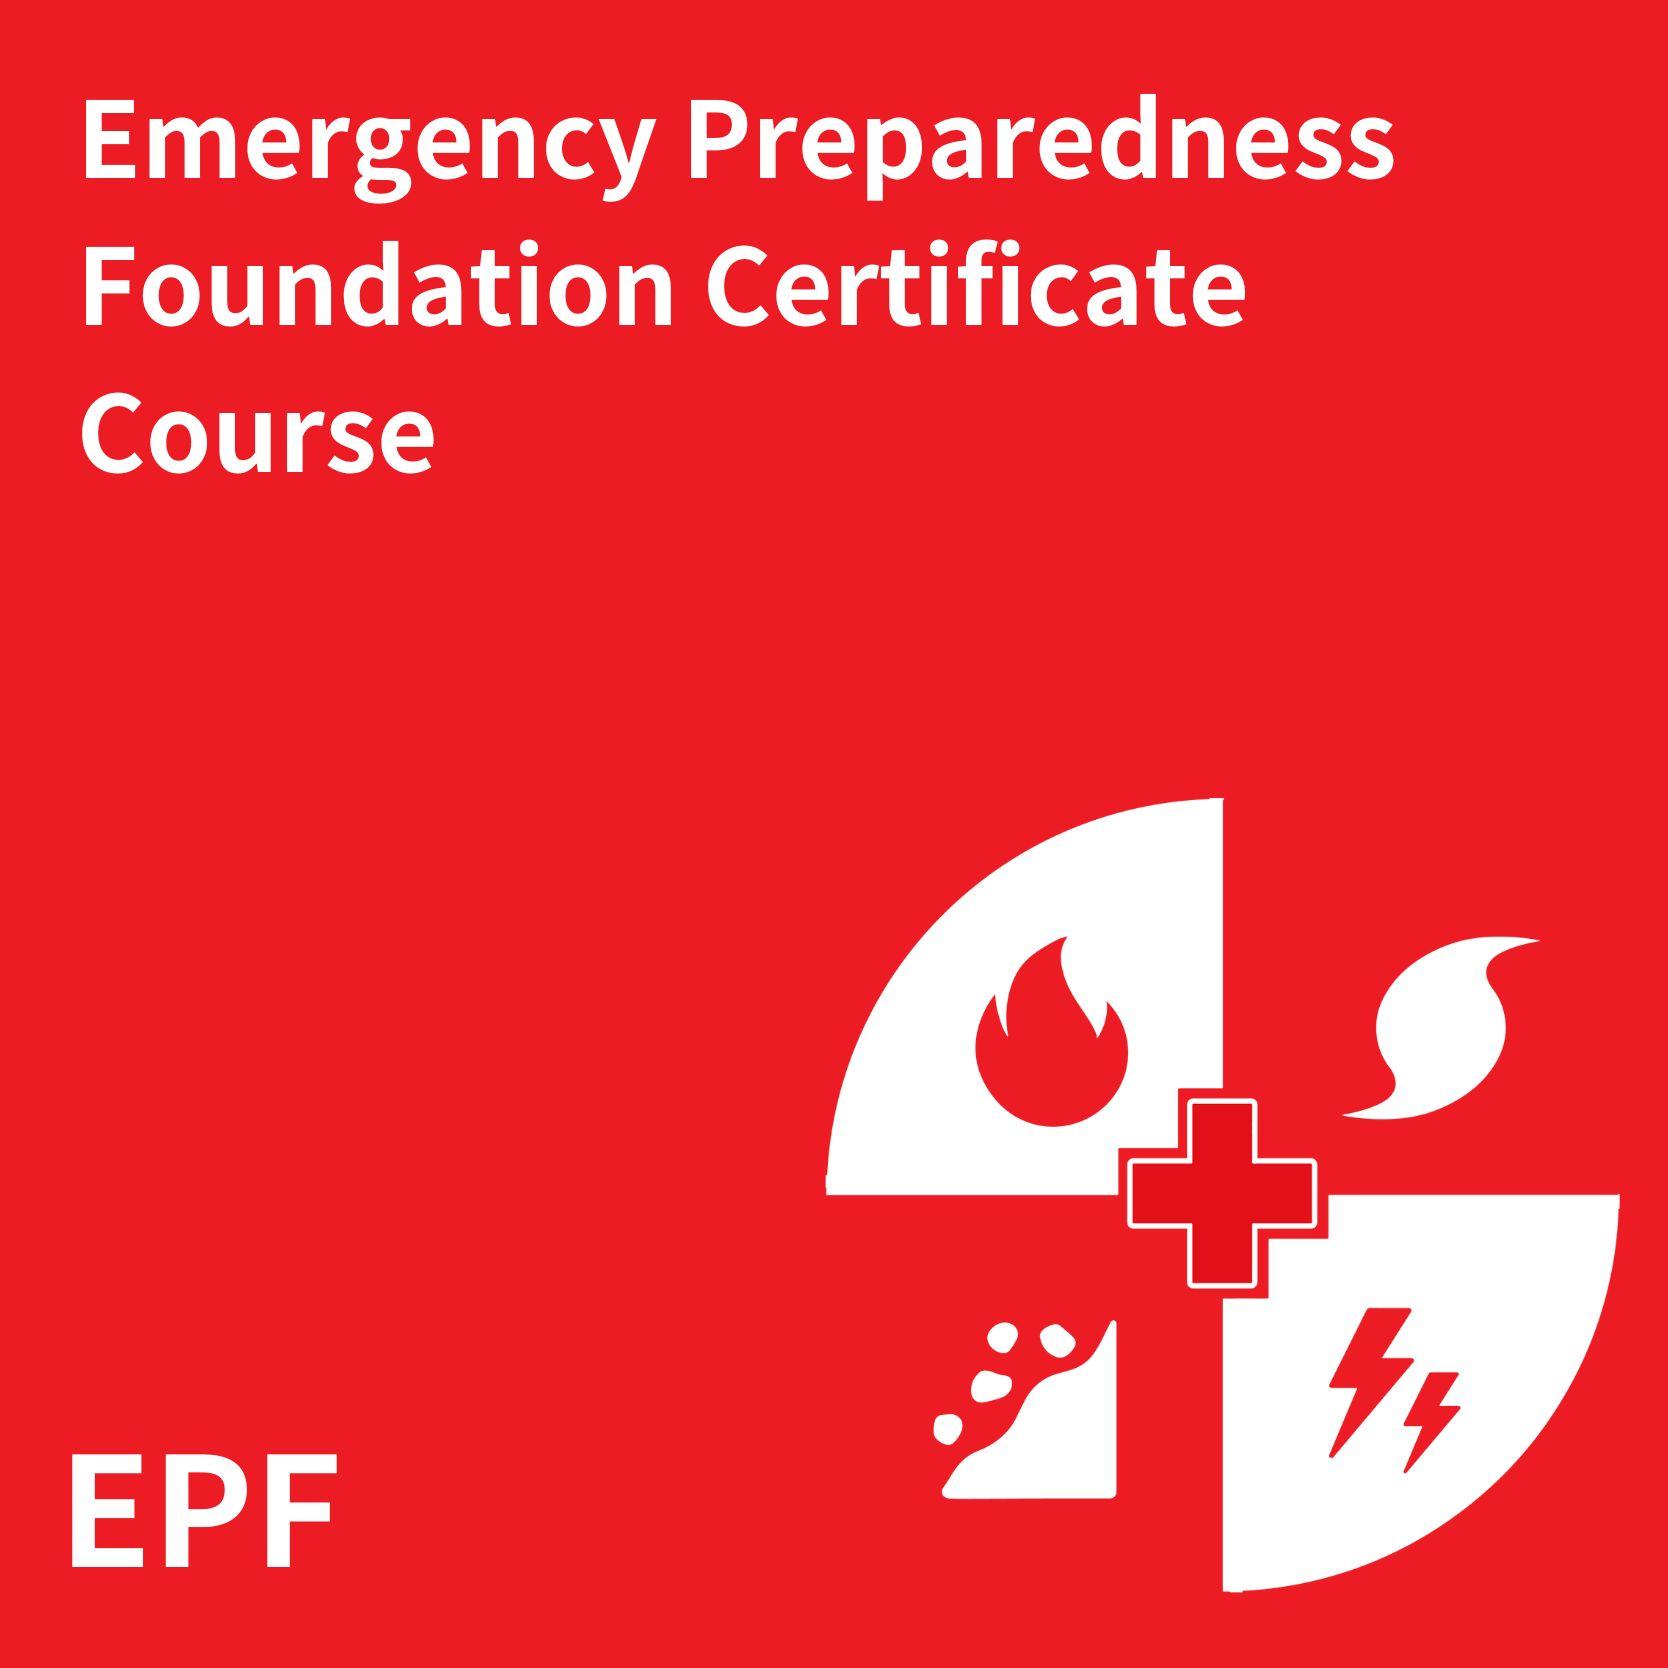 Emergency Preparedness Foundation Certificate Course